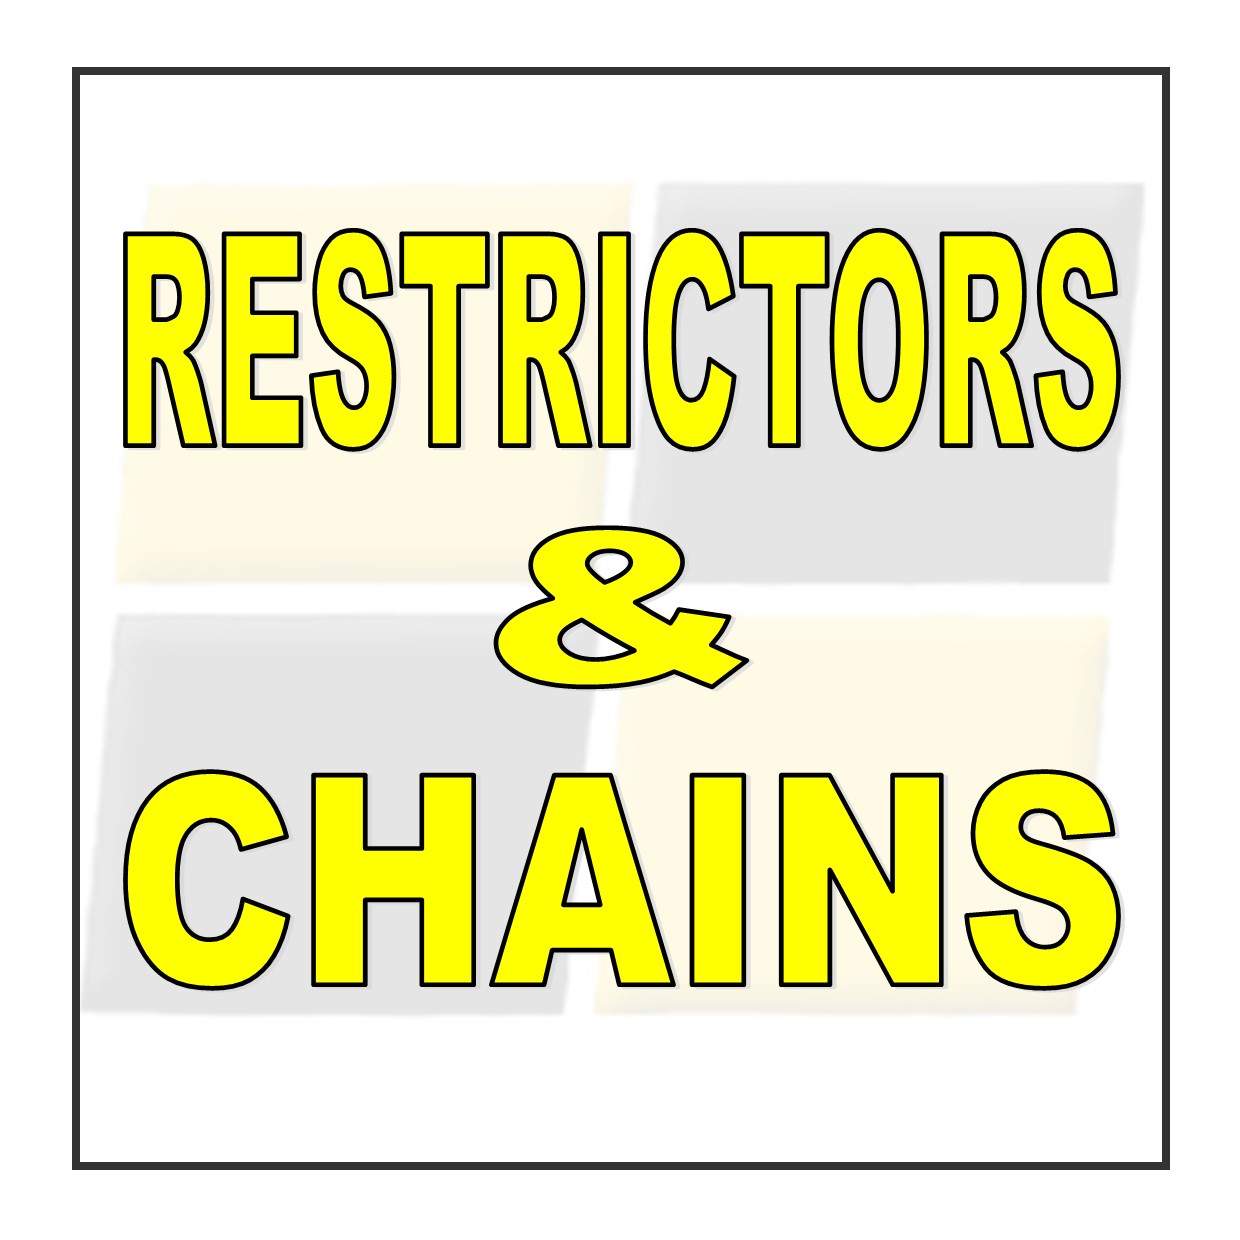 Restrictors & Chains